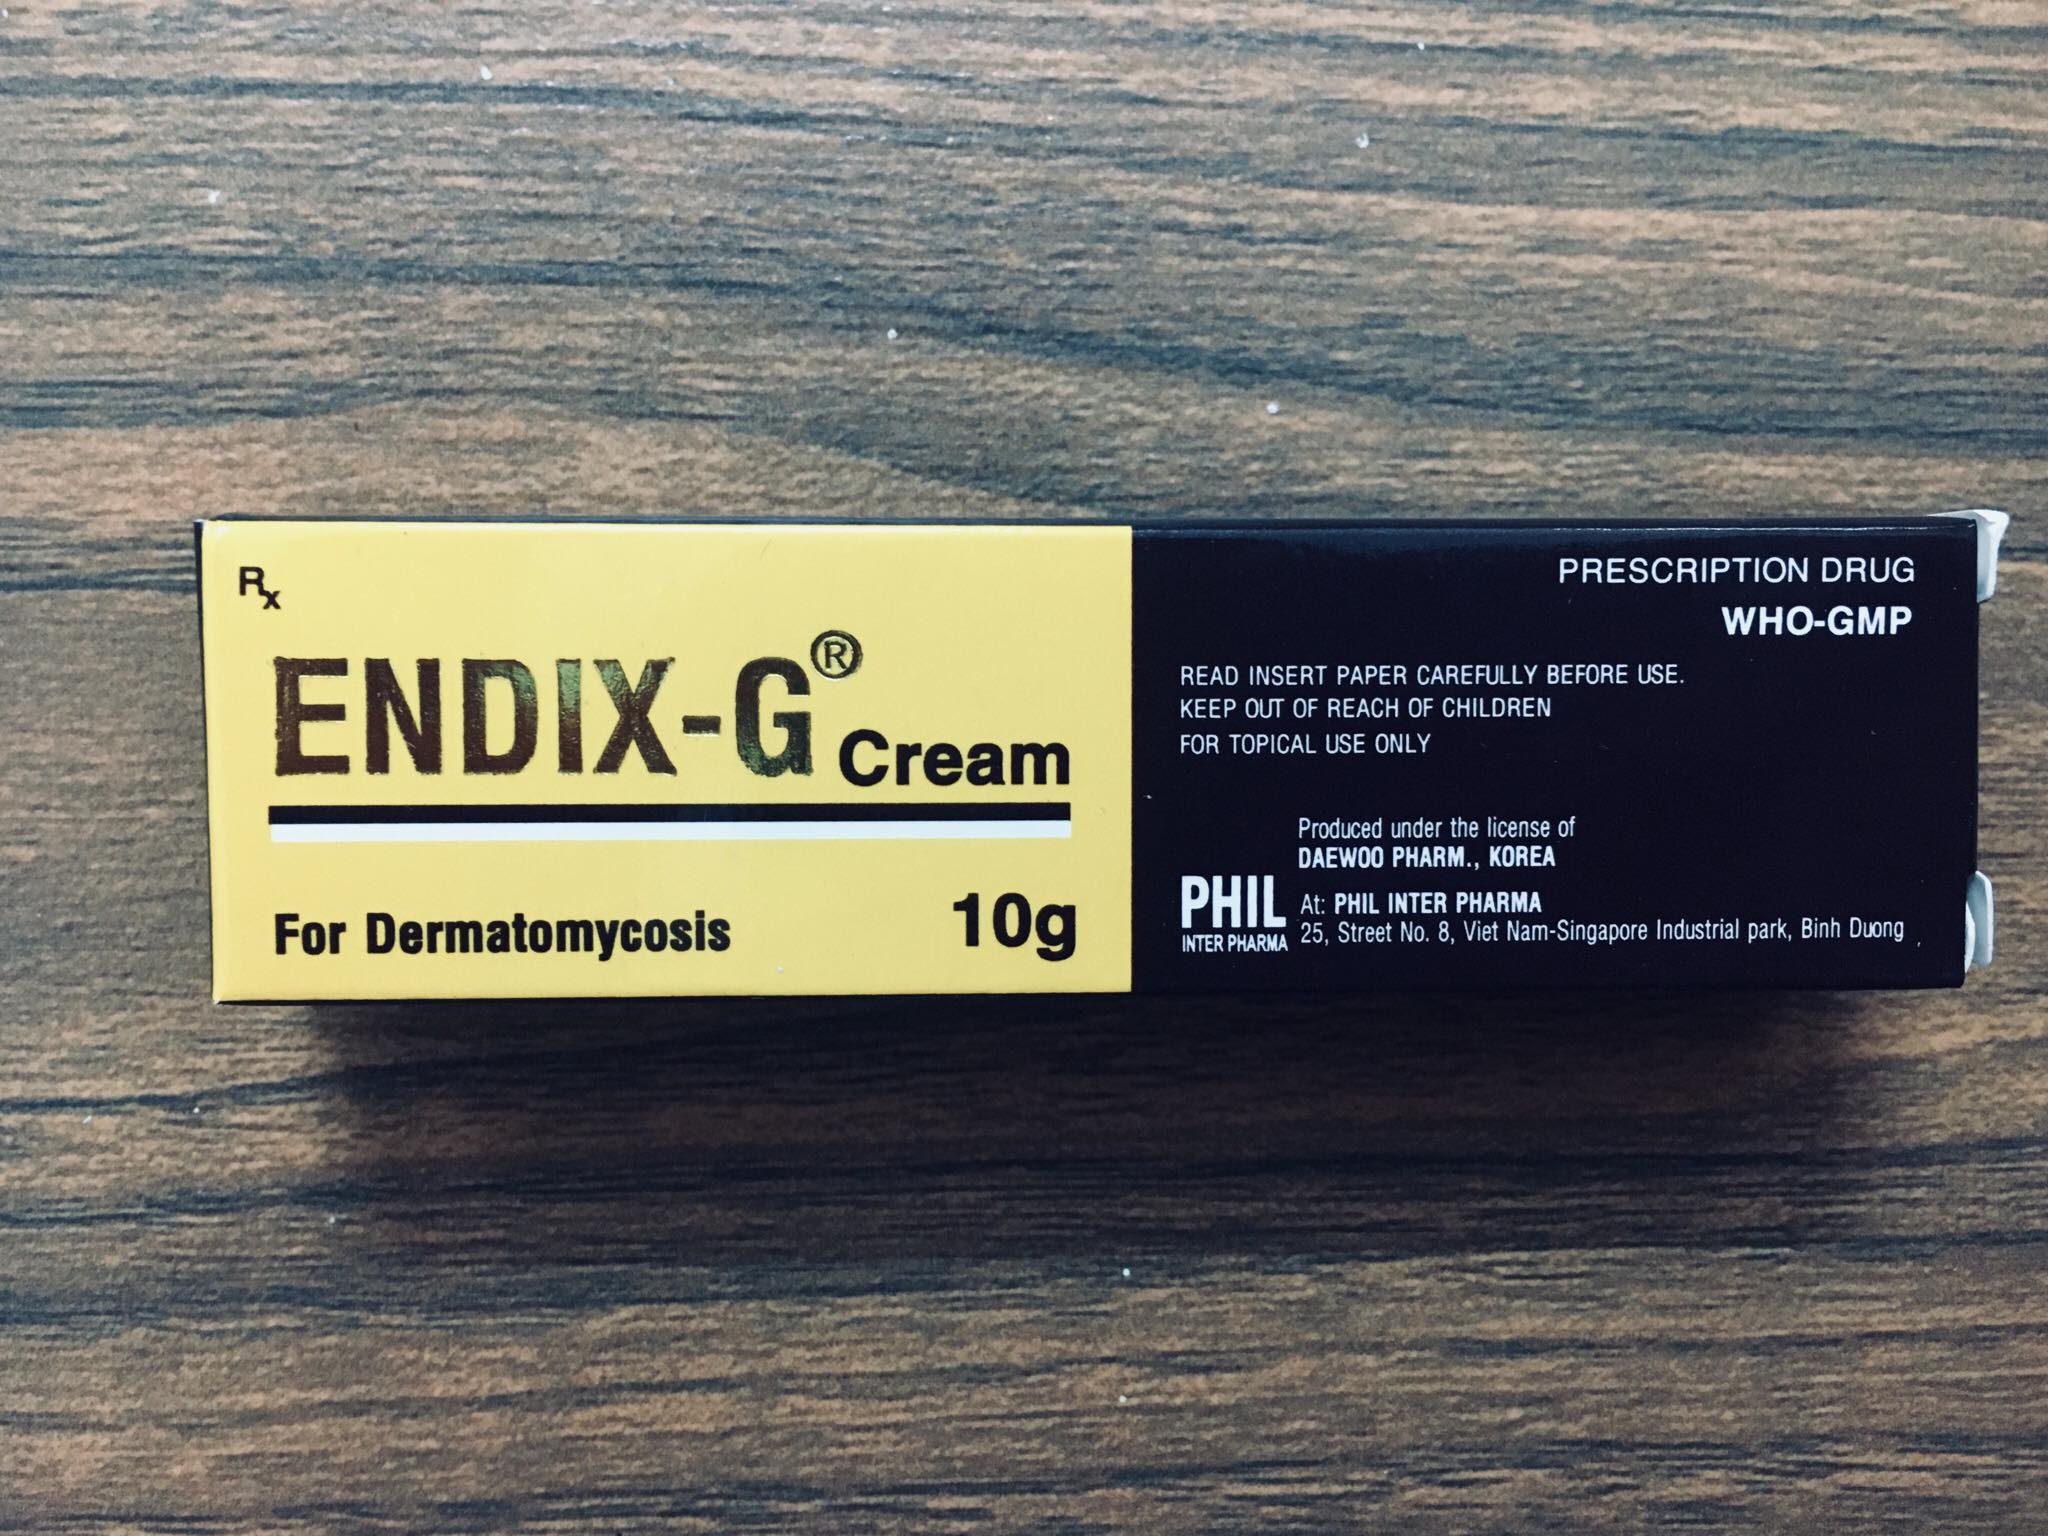 Endix-G cream